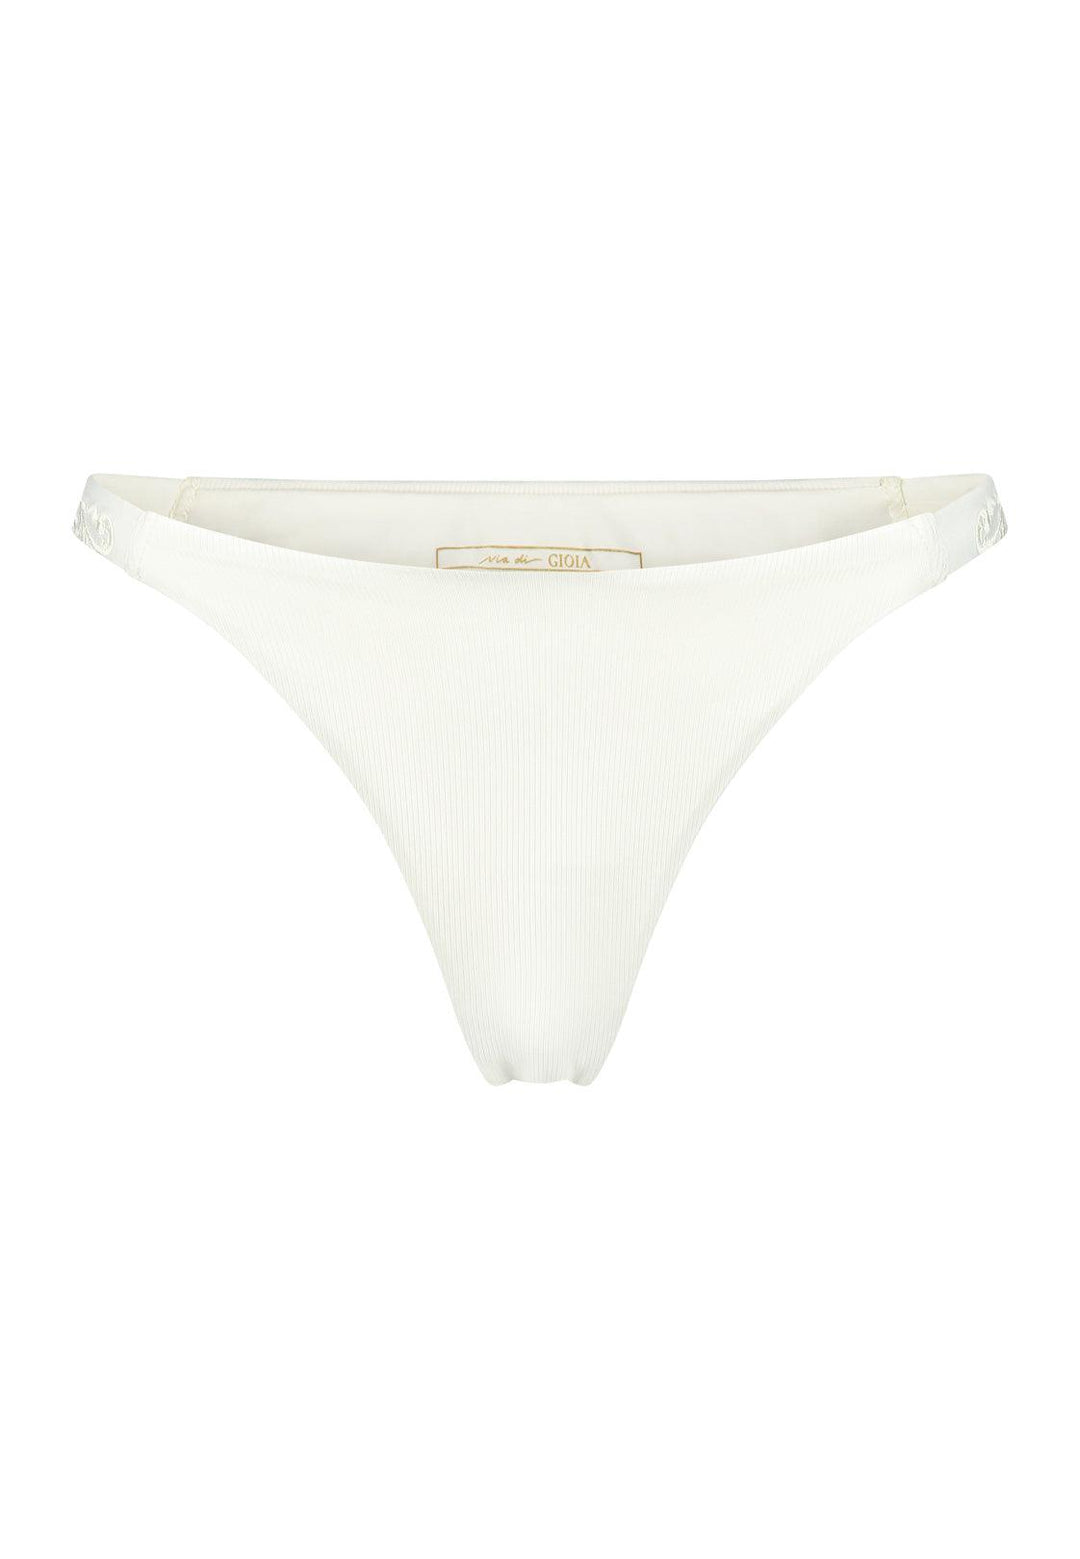 Bikini bottom Brazilian-tanga in ivory white with rib fabric and embroidery, product front